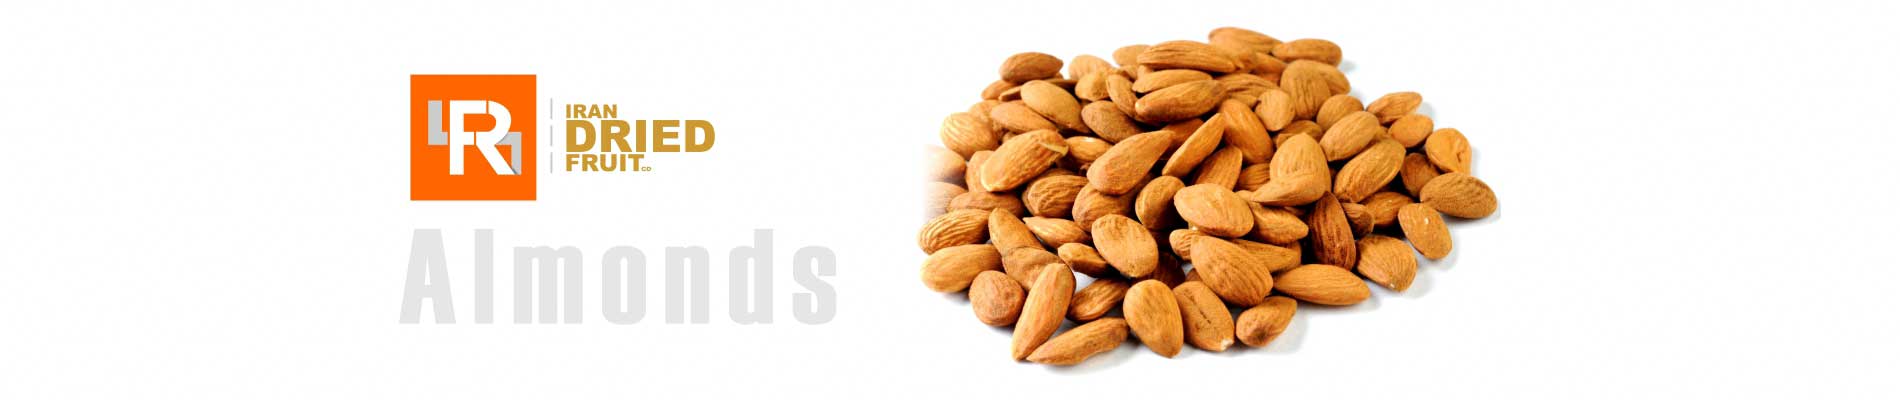 Almonds-iran-dried-fruit